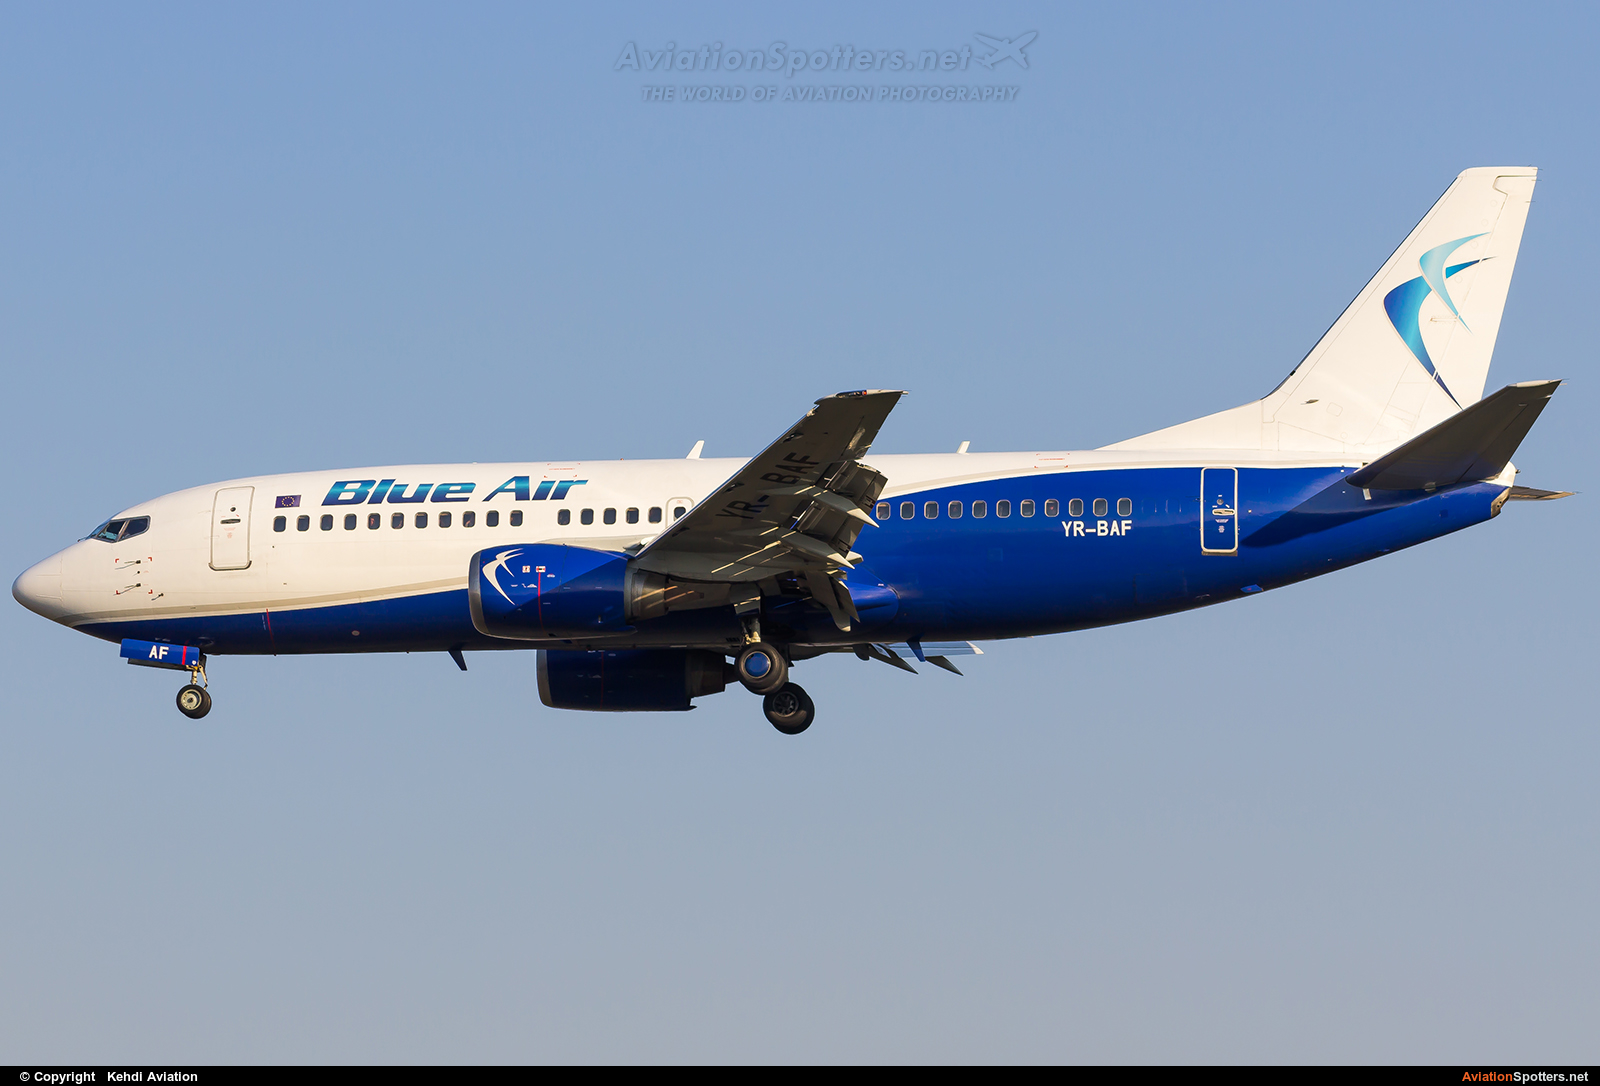 Blue Air  -  737-300  (YR-BAF) By Kehdi Aviation (Kehdi Aviation)